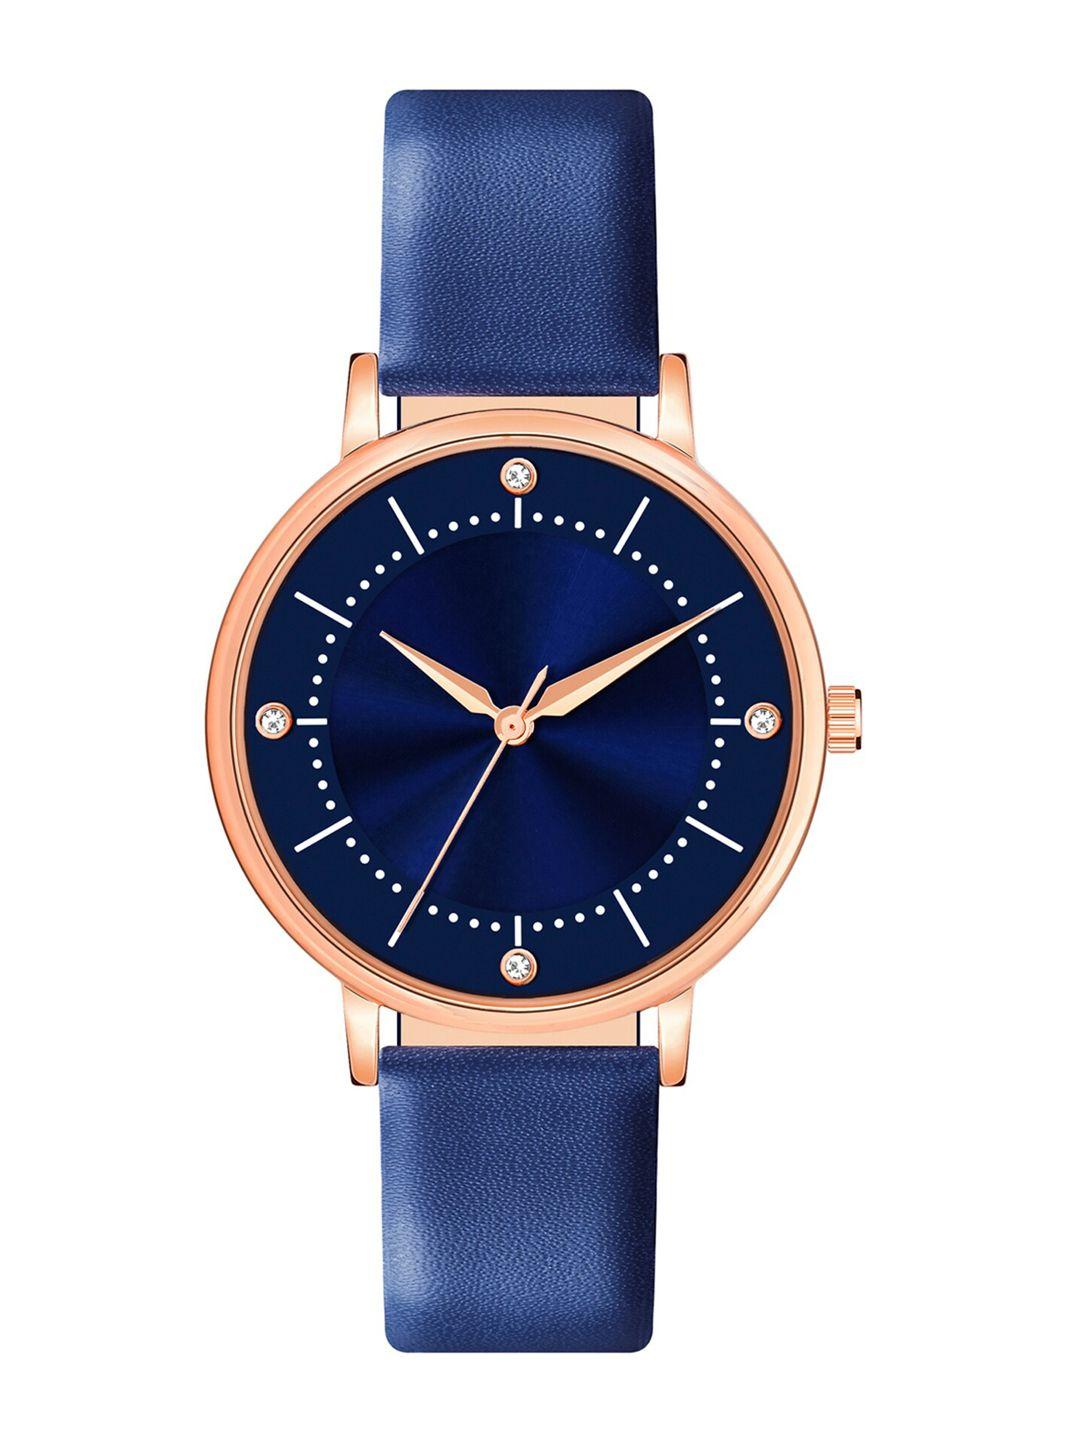 shocknshop women blue embellished dial & leather straps analogue watch- mt515